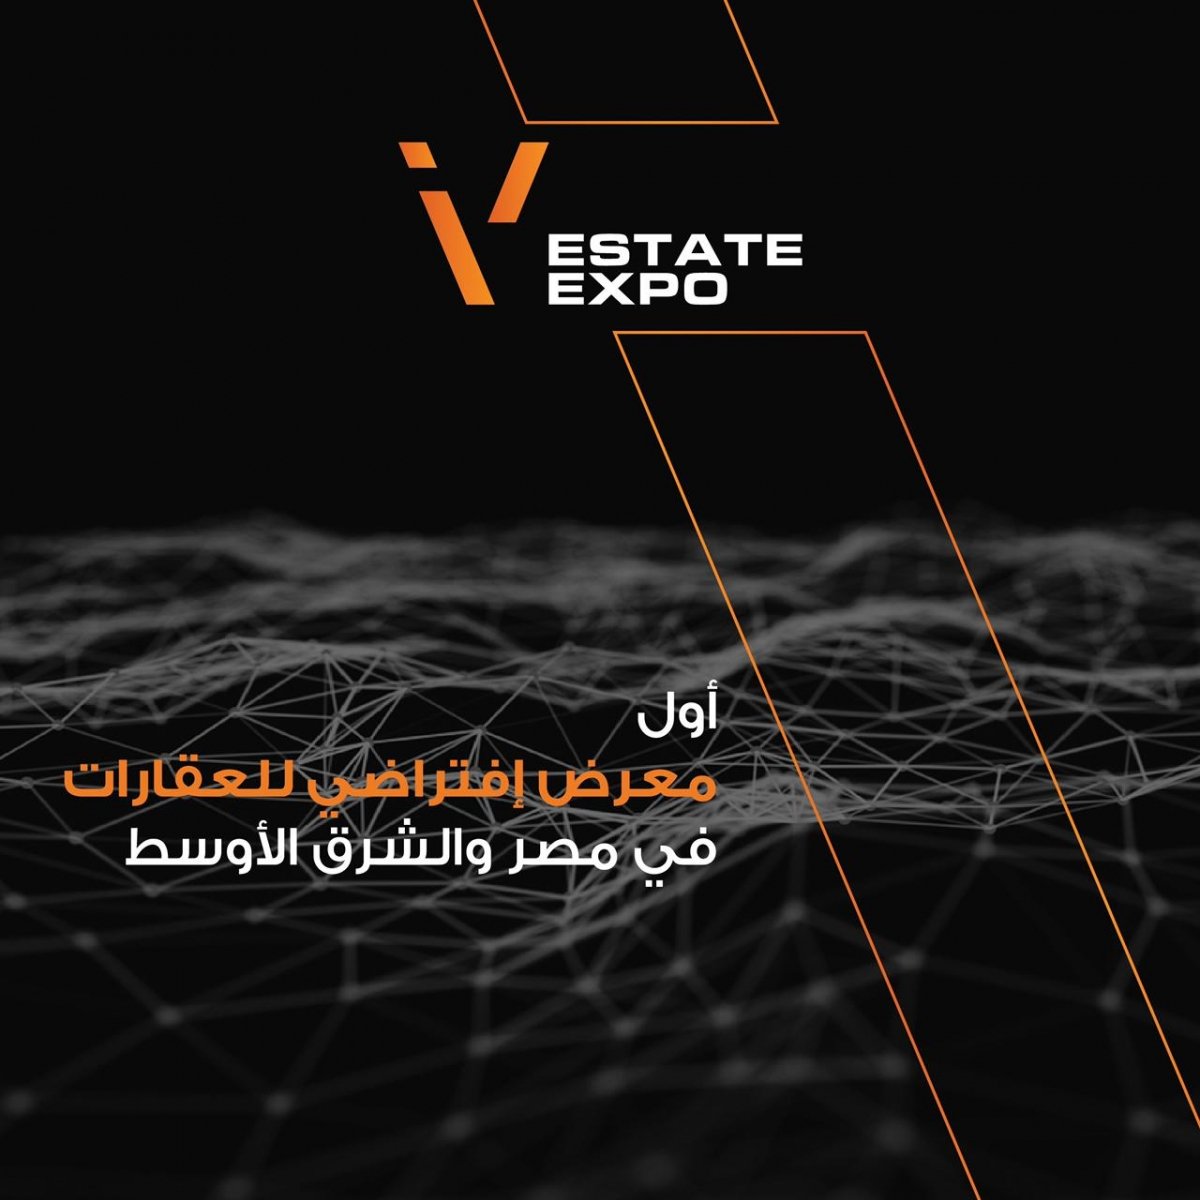 "V-estate expo"تطلق معرضا للعقارات غداً.. بمشاركة واسعة من كبار المطورين في الشرق الأوسط على مدى ثلاثة أيام